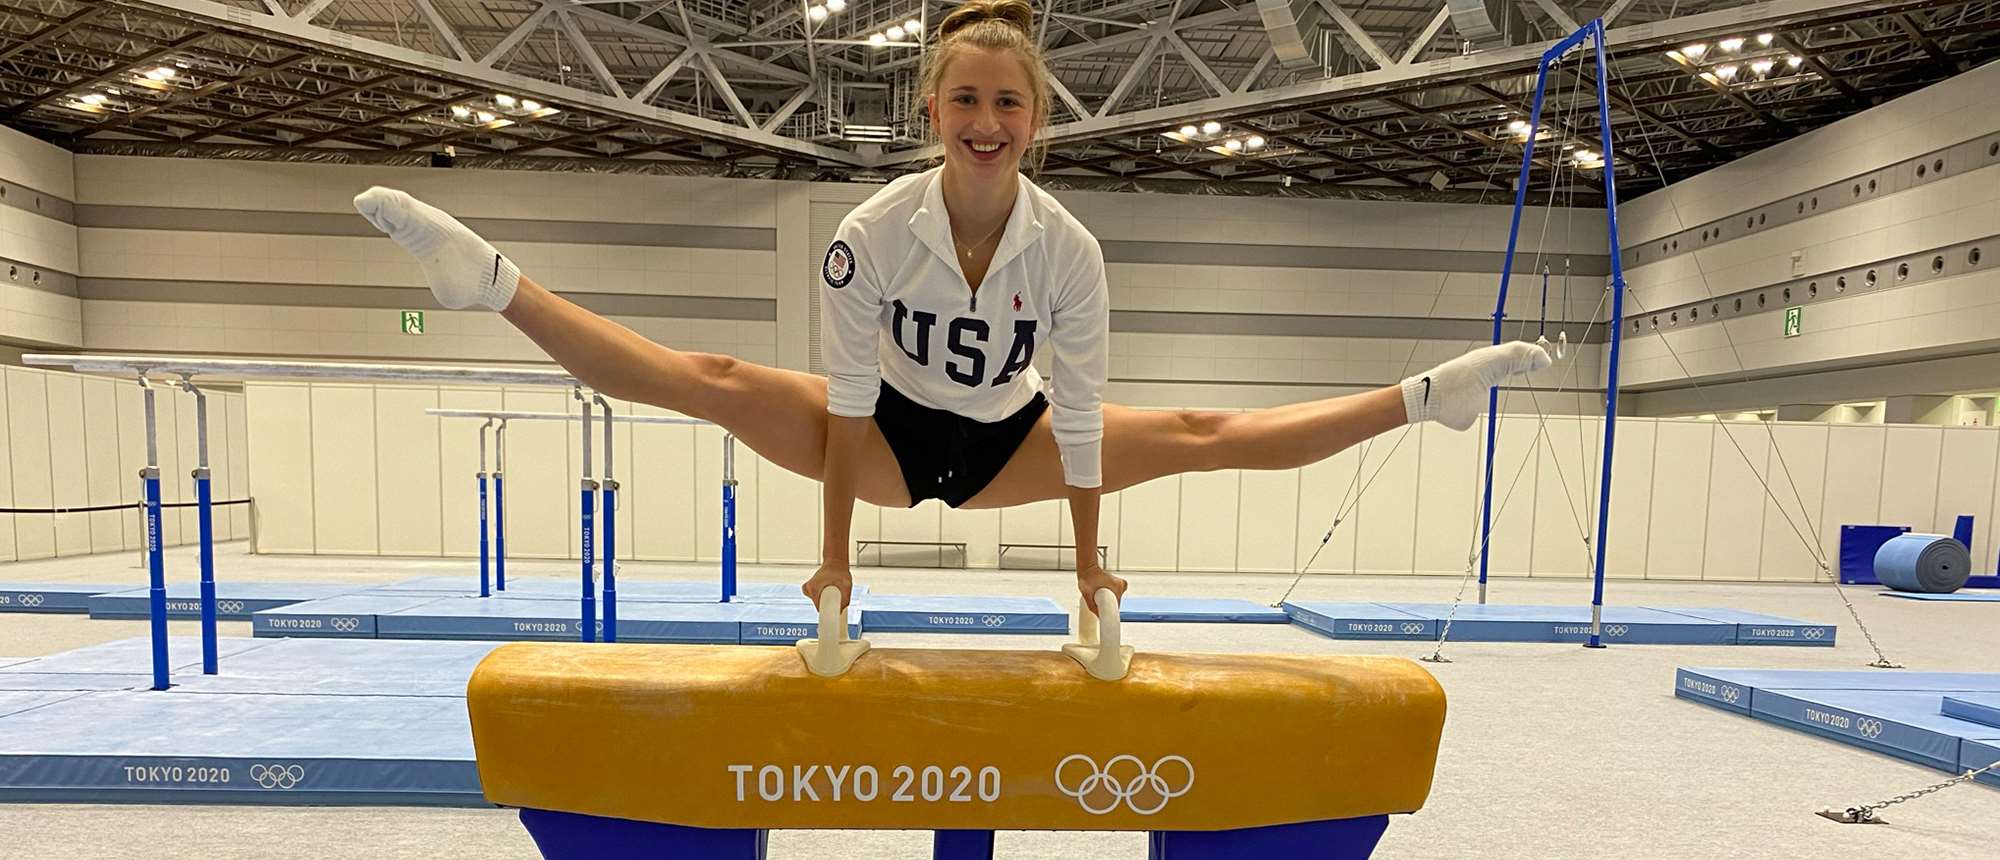 From Olympic gymnastics to medicine: Liza Merenzon’s inspiring journey